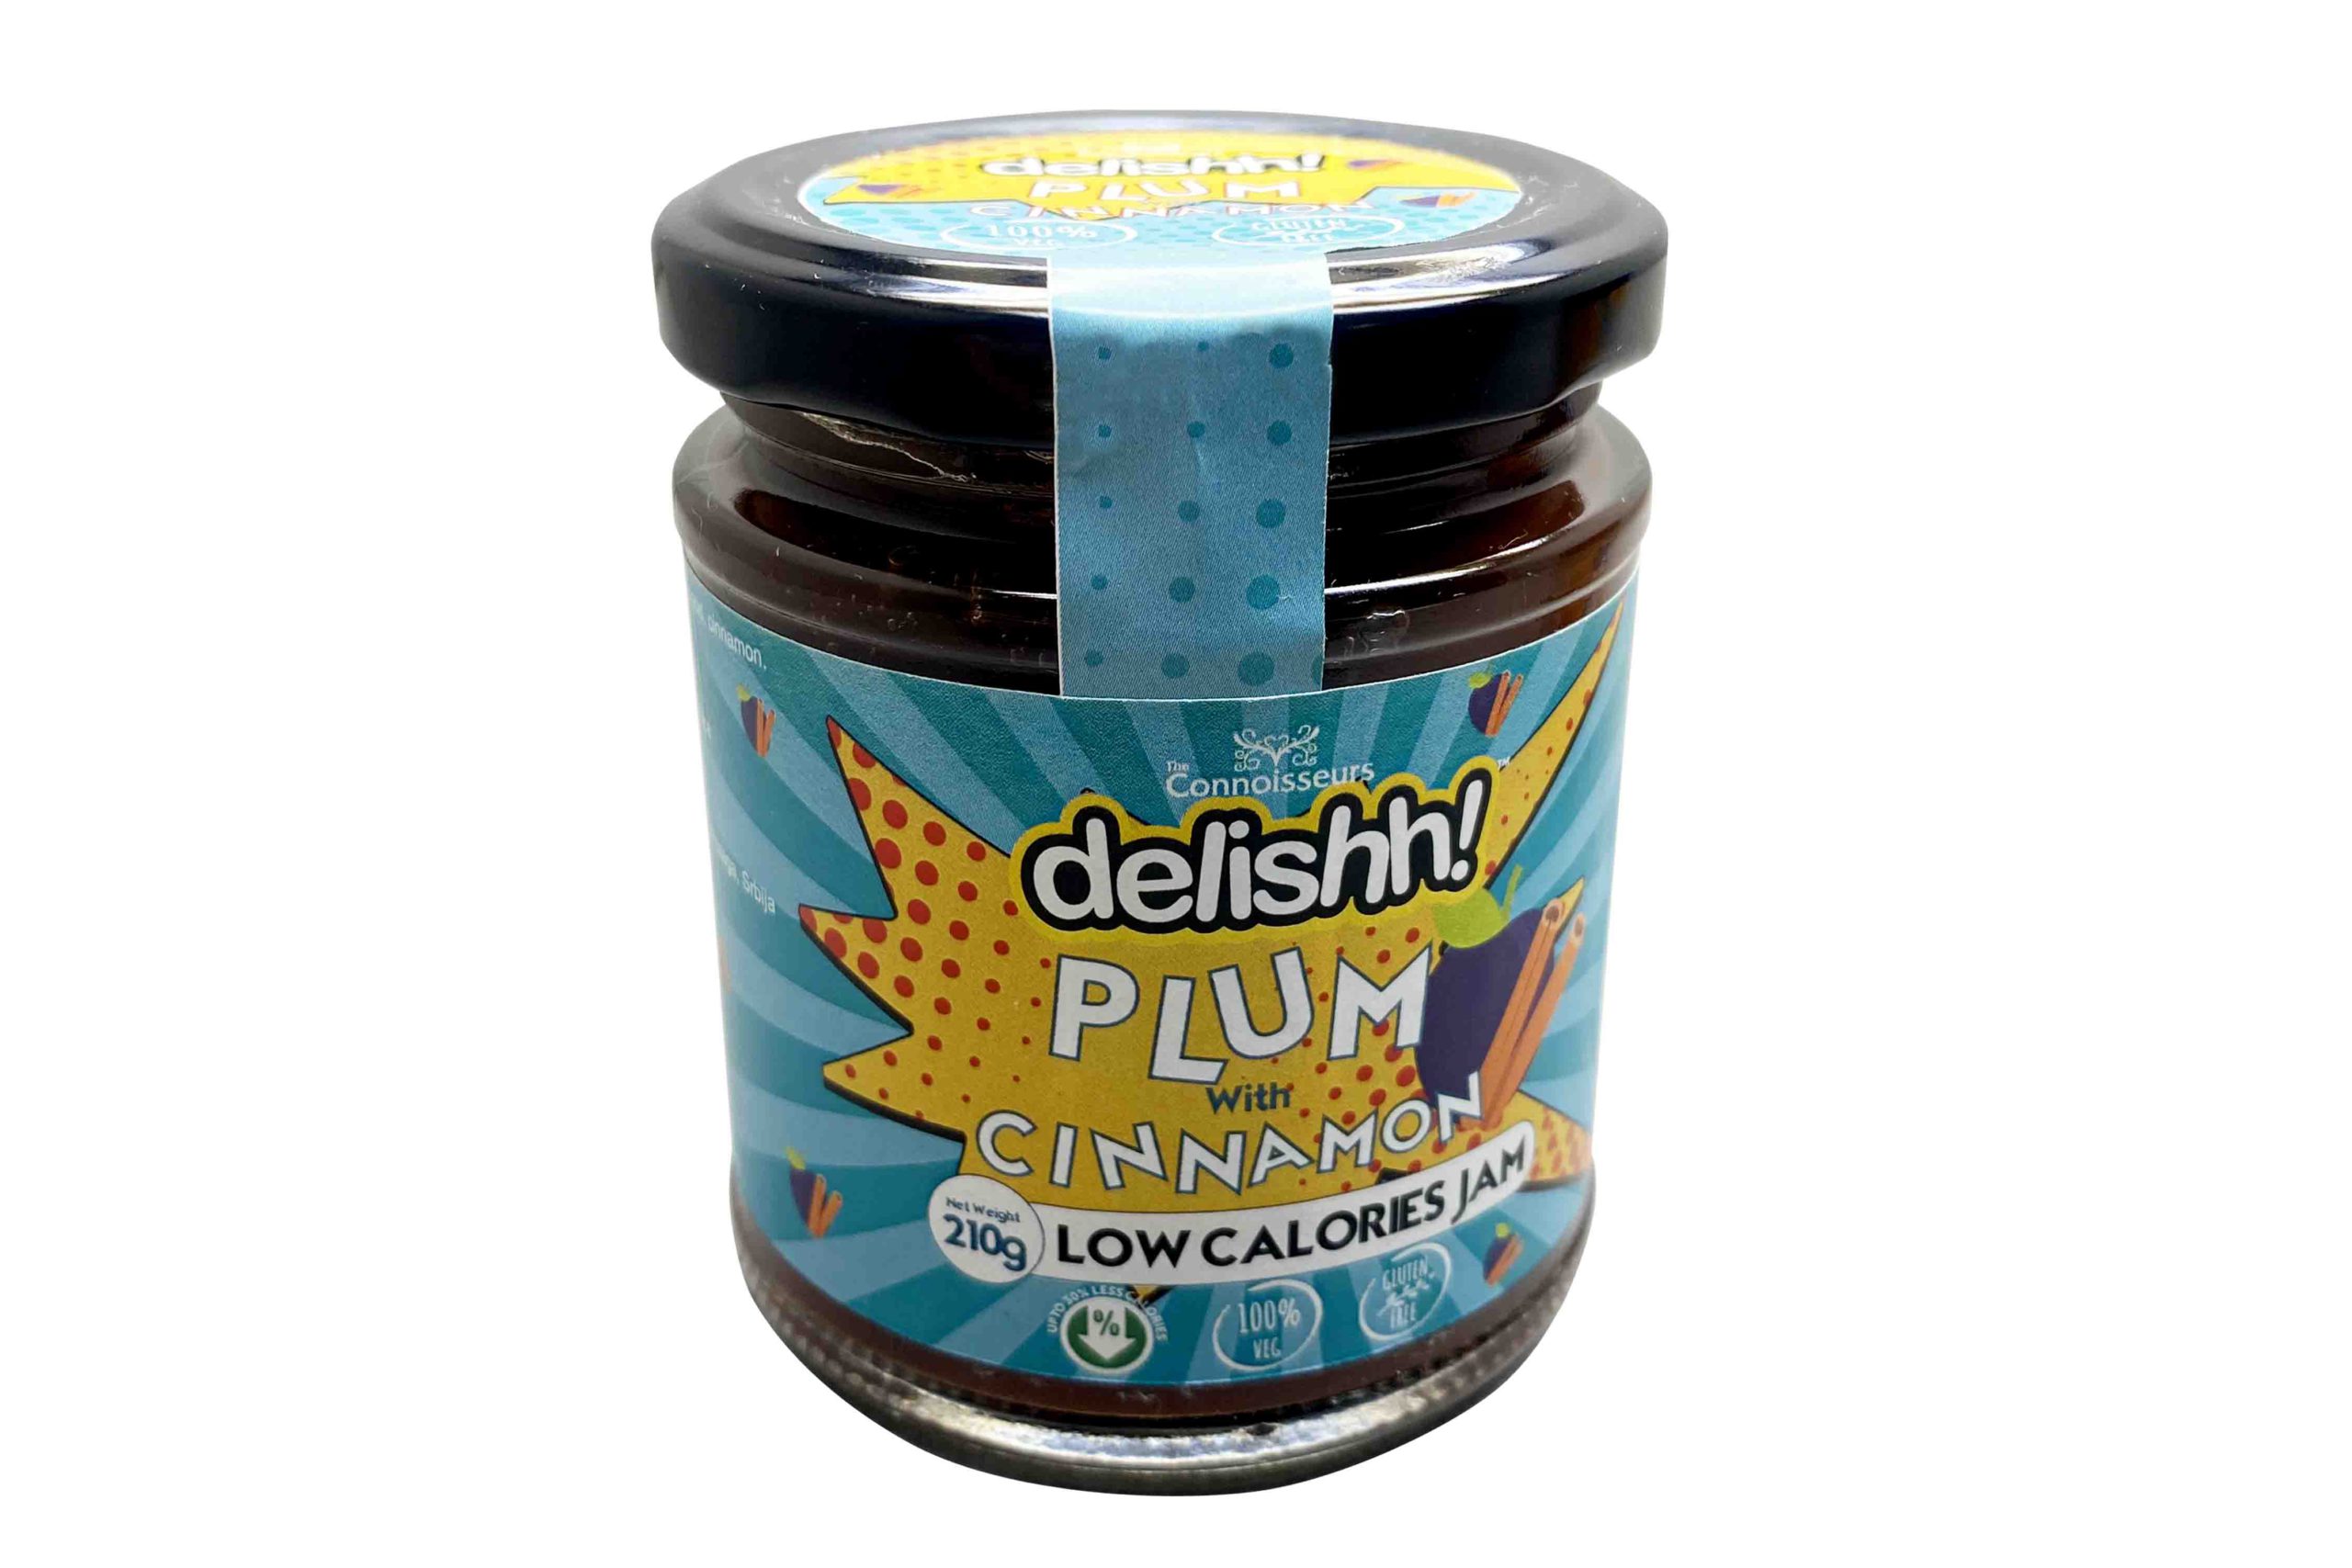 Delishh Plum Fruit Jam